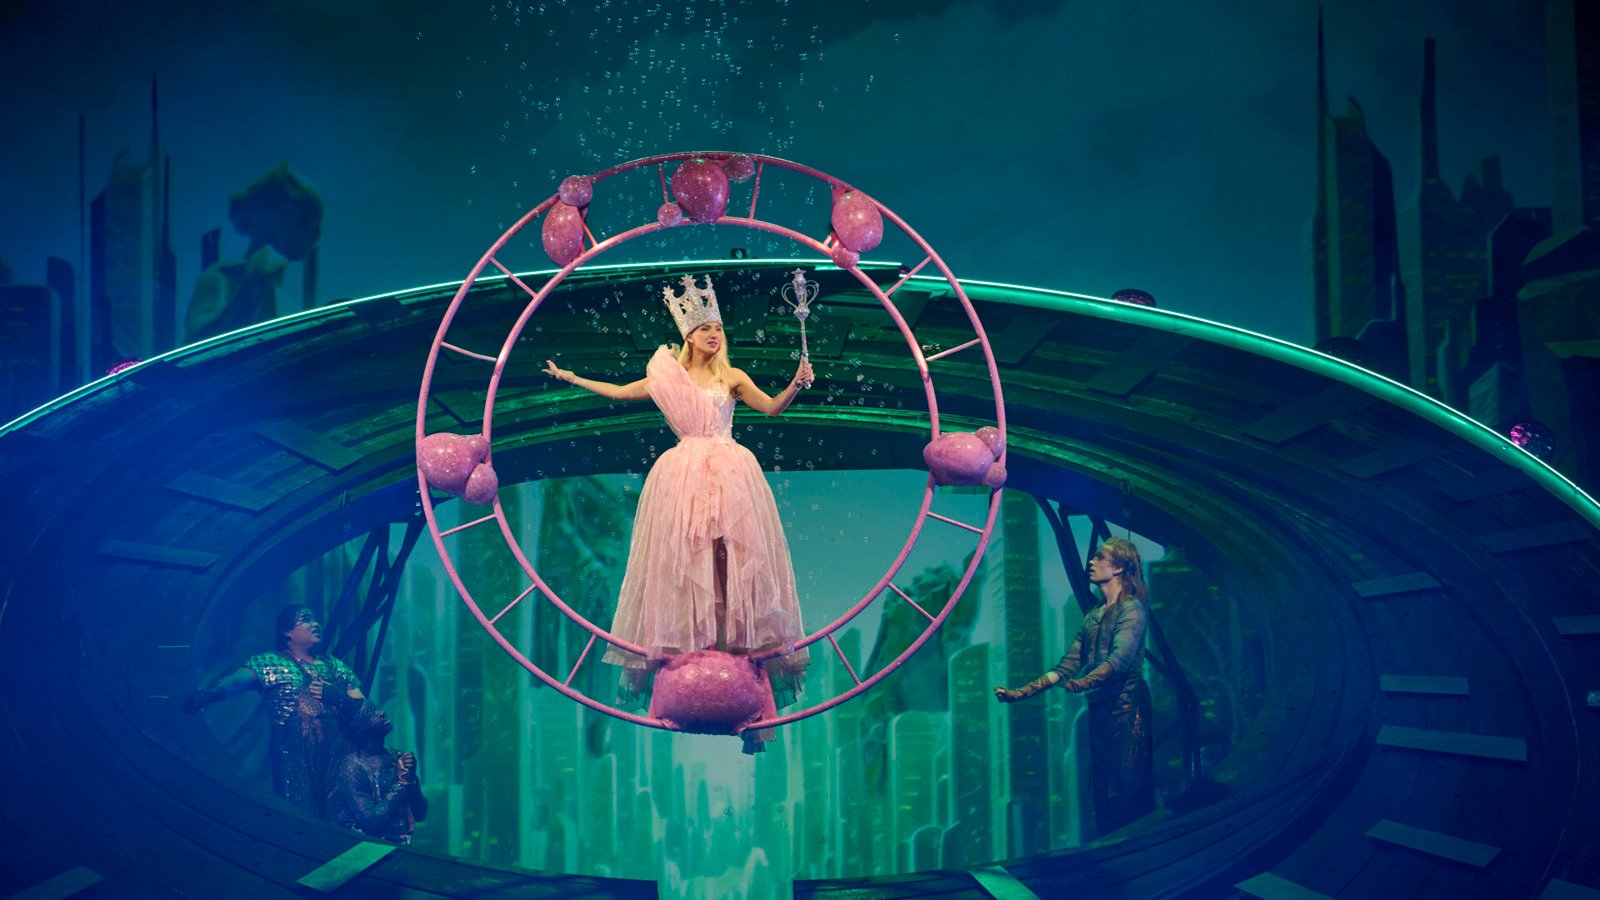 Princess in pink dress balancing on a flying circle